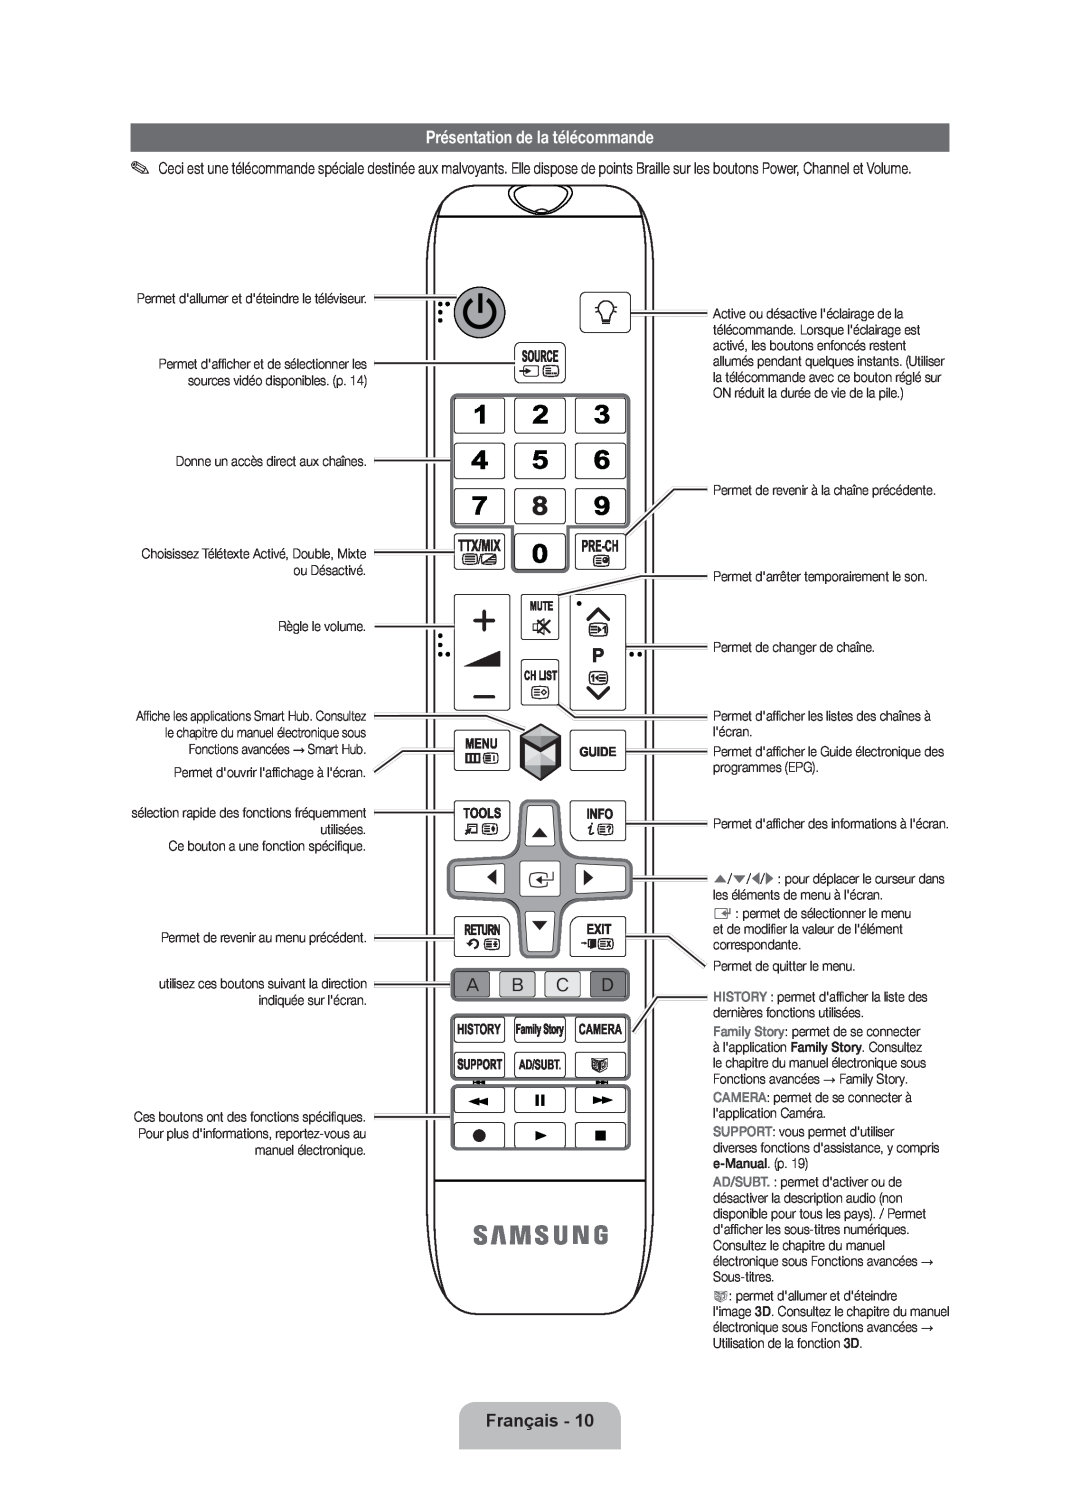 Samsung UE55ES7000SXZF, UE46D7090LSXZG, UE46ES7000SXXC Présentation de la télécommande, Français, Camera, History, Ad/Subt 